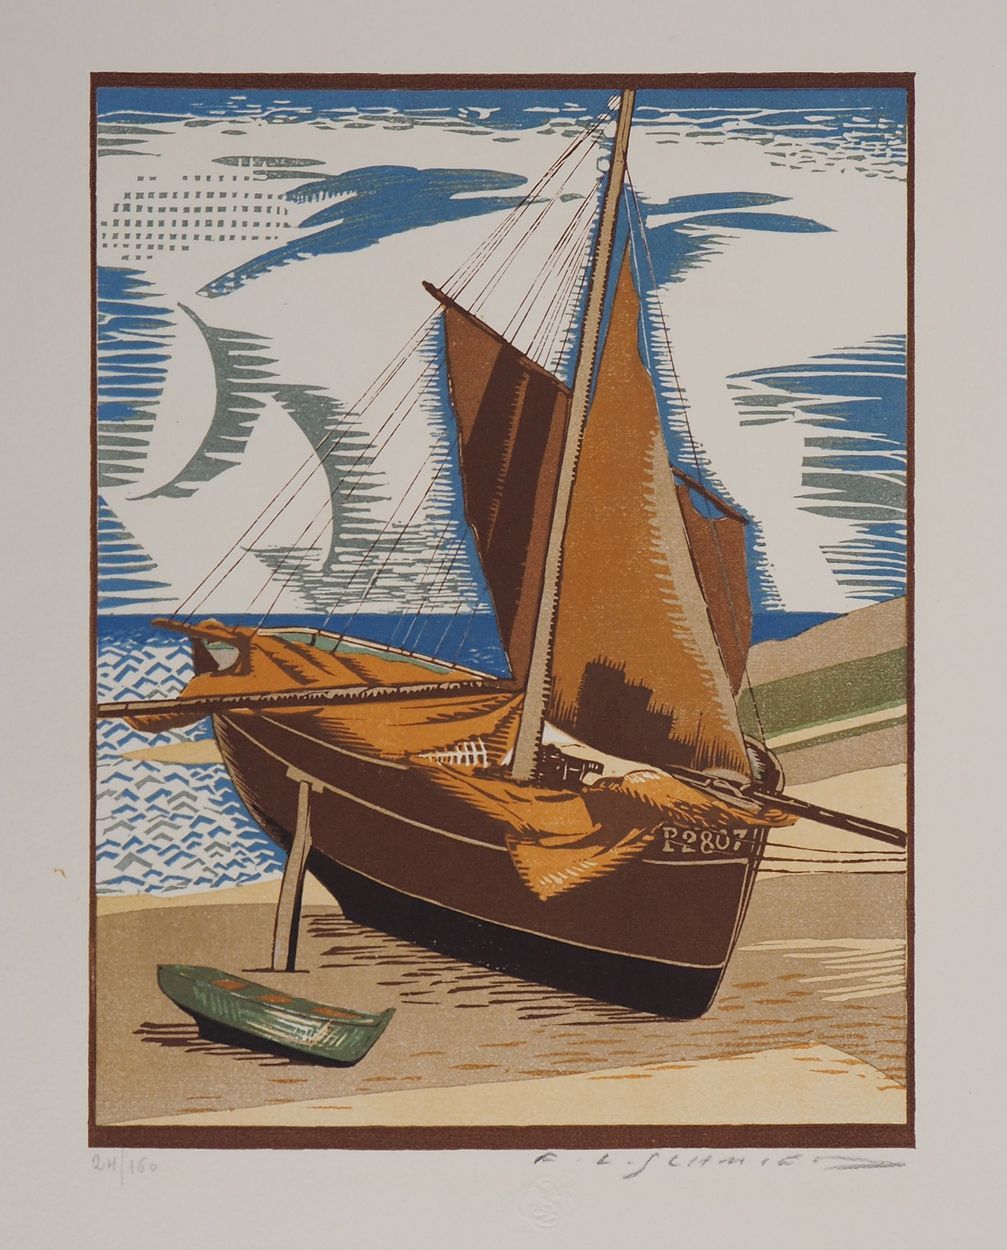 François-Louis Schmied 弗朗索瓦-路易-施密德

布列塔尼，海滩上的船，1924年

原始木刻

用铅笔签名

有编号/160份

牛皮纸&hellip;